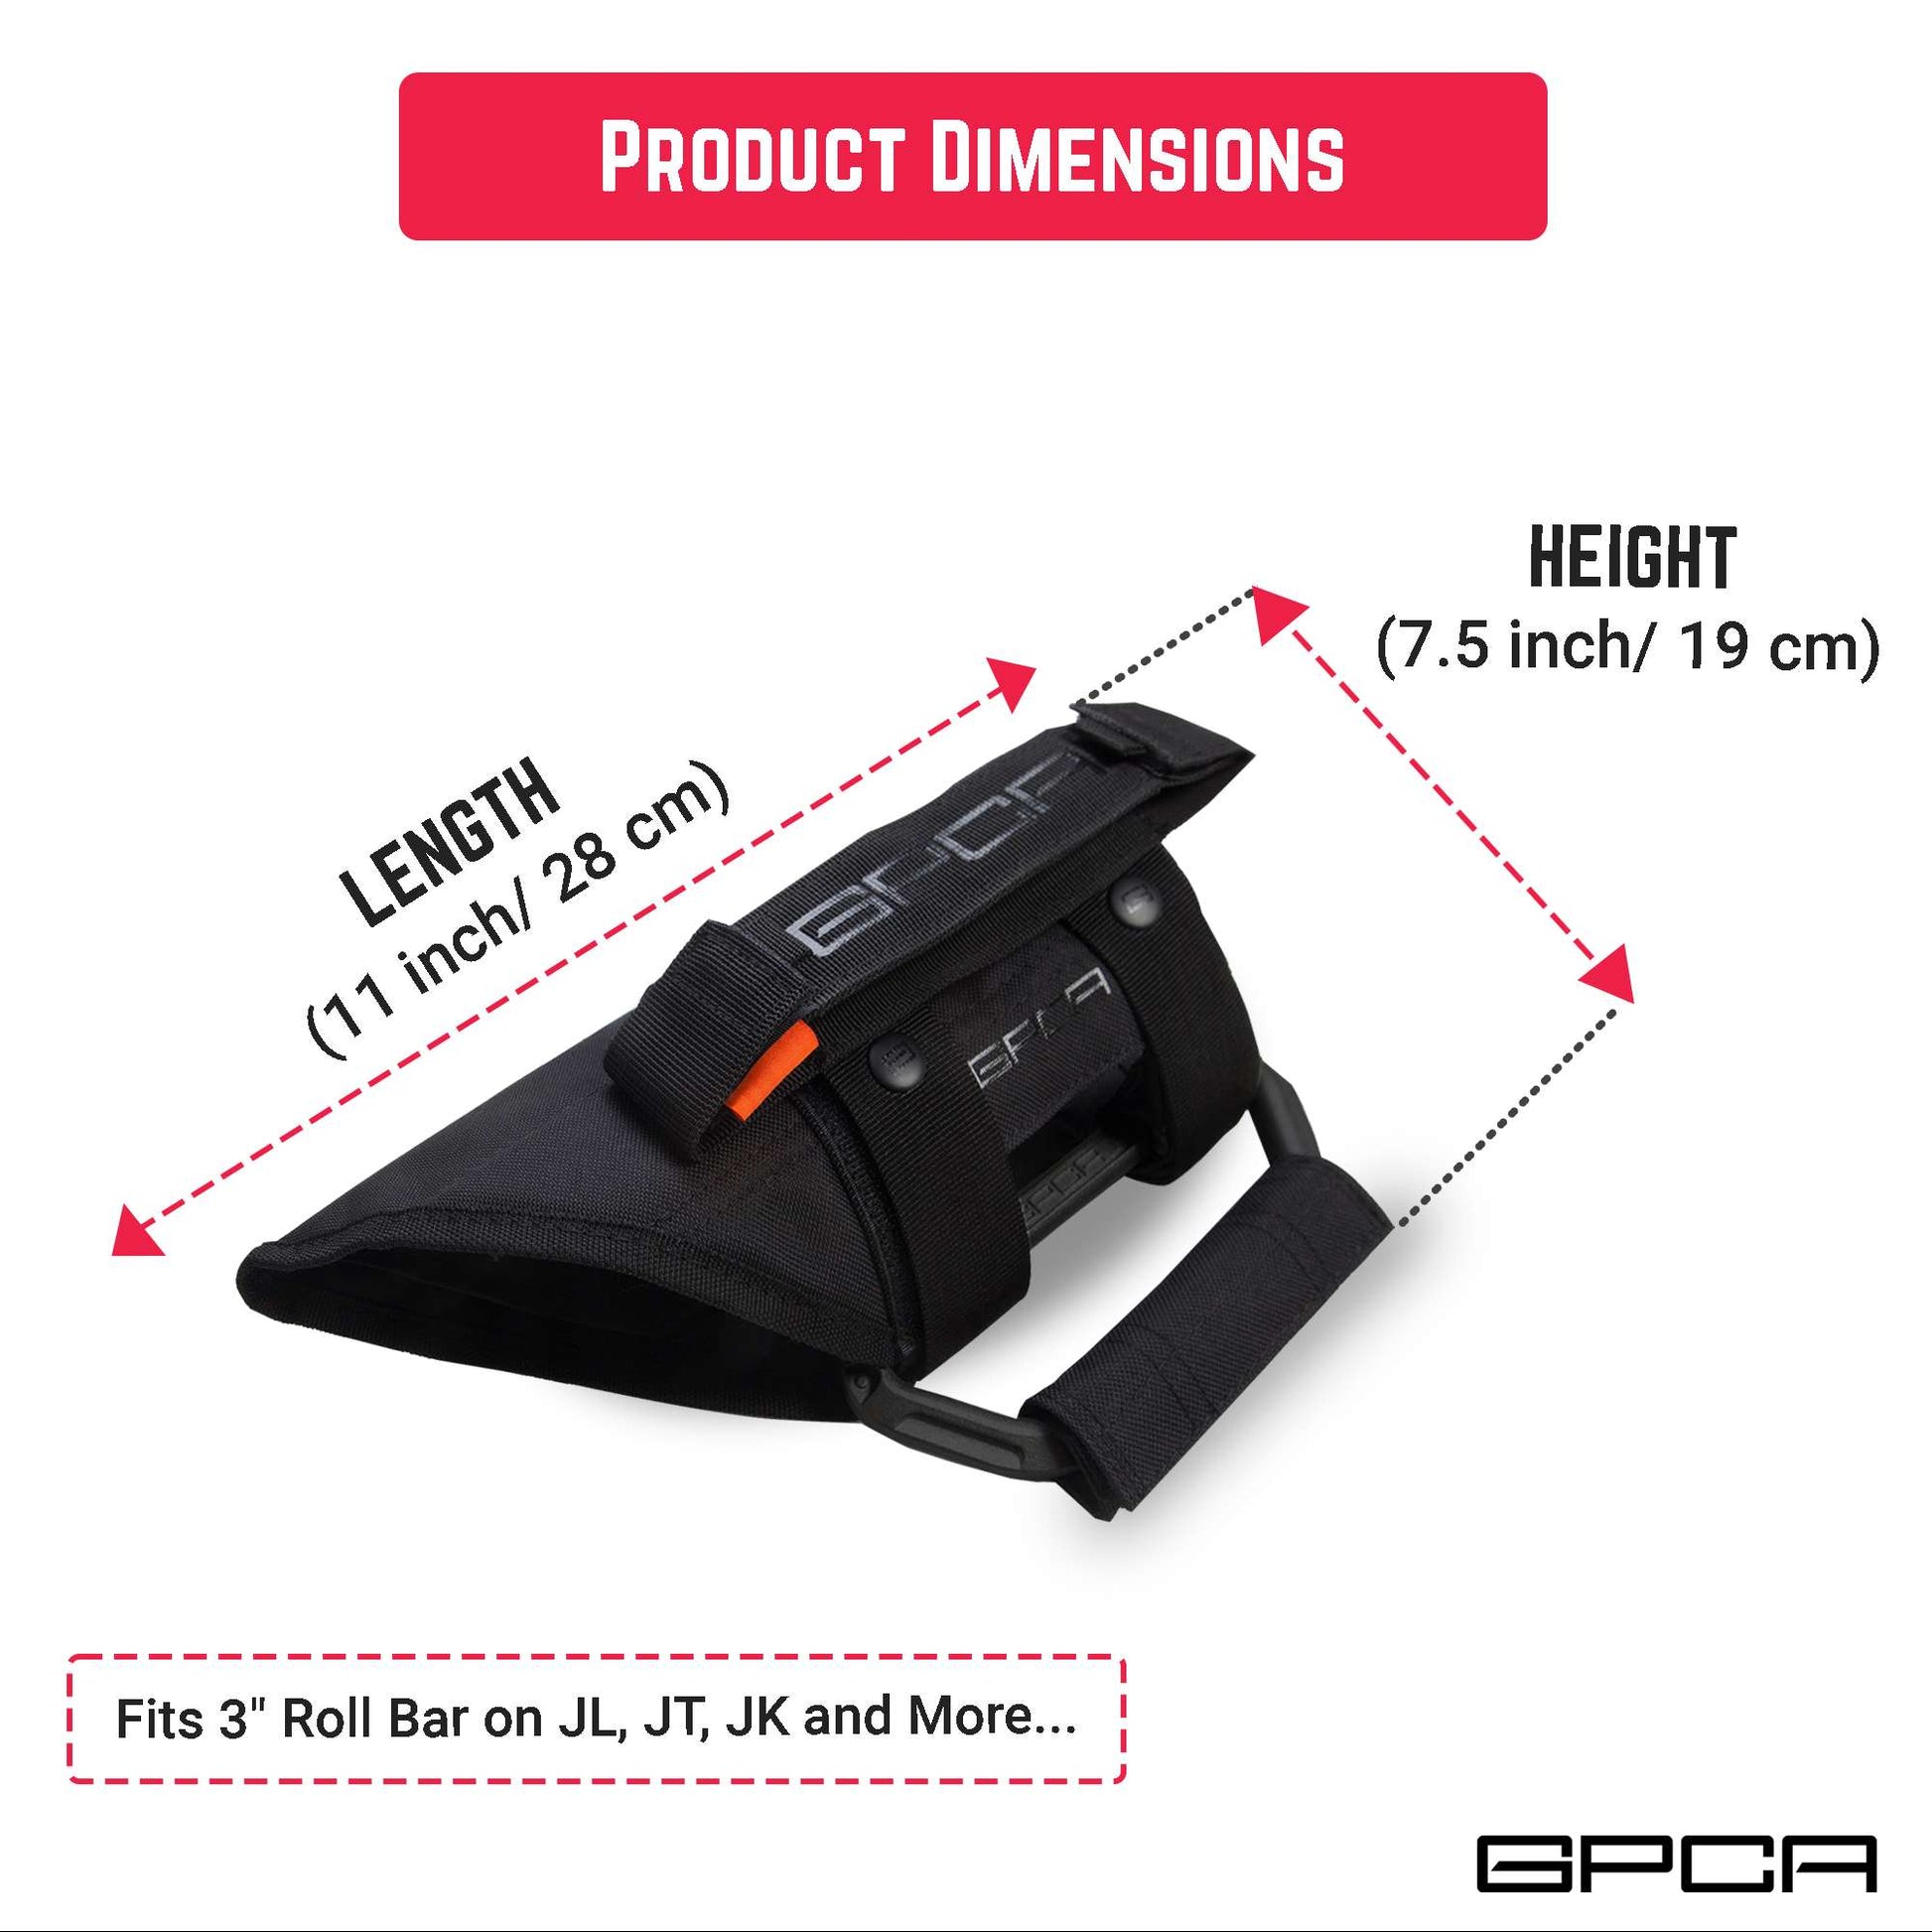 GPCA GP Grip Pro Black, Fits 3" Roll Bar on JL, JT, JK and More